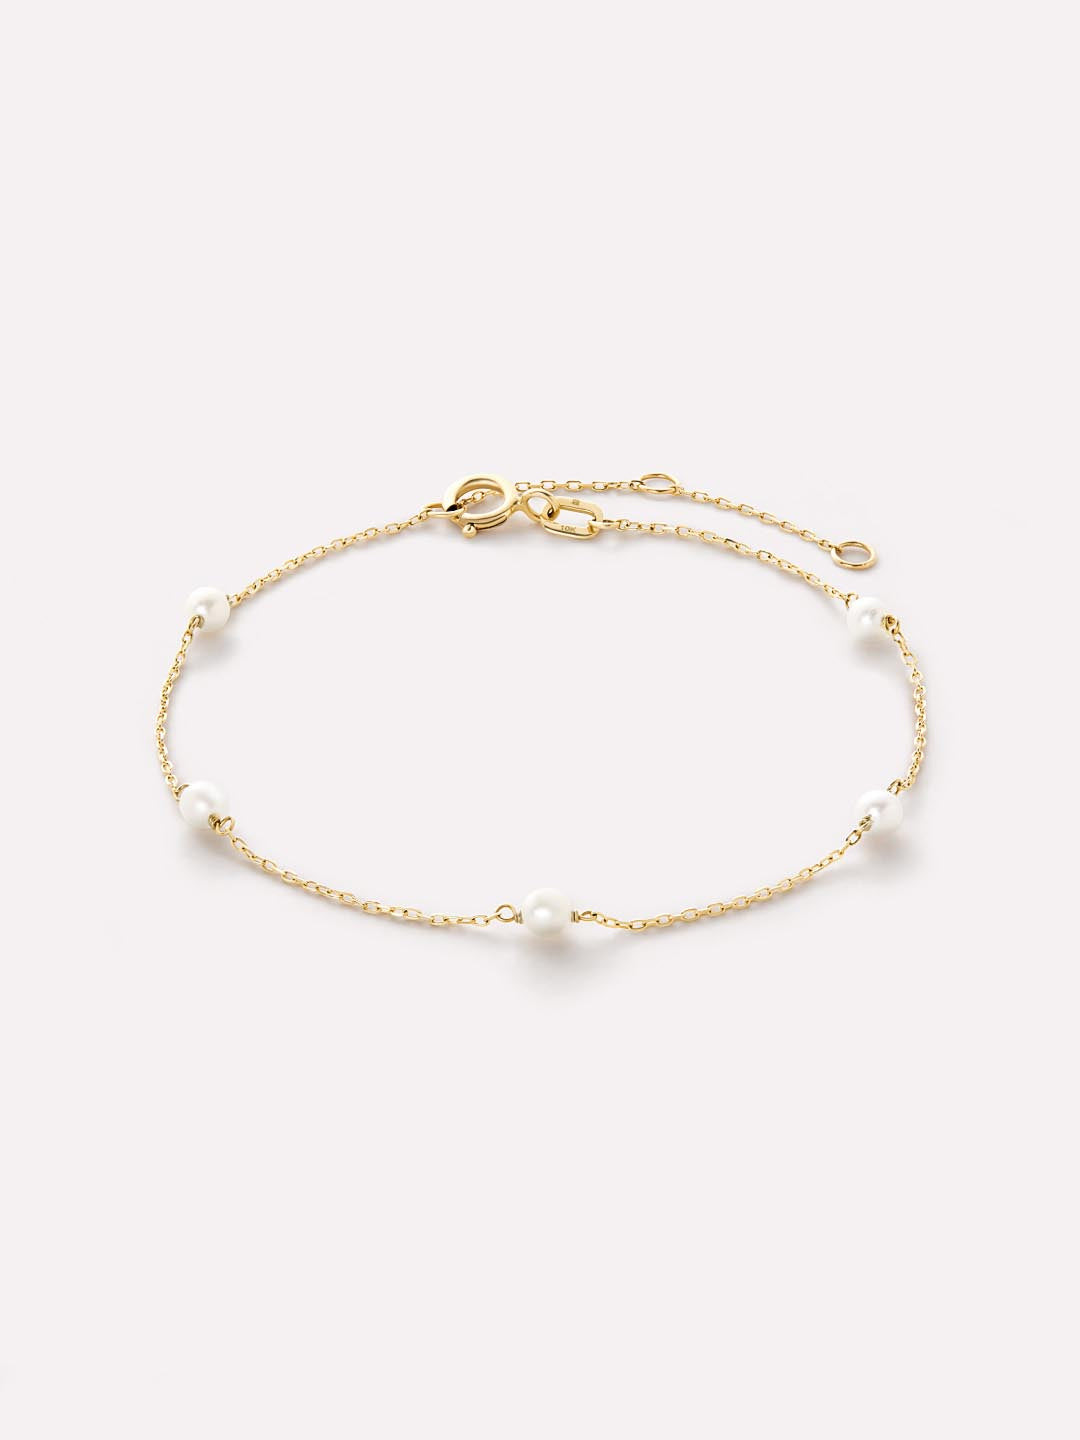 Flower bracelet - Rowena Bracelet | Ana Luisa | Online Jewelry Store At  Prices You'll Love